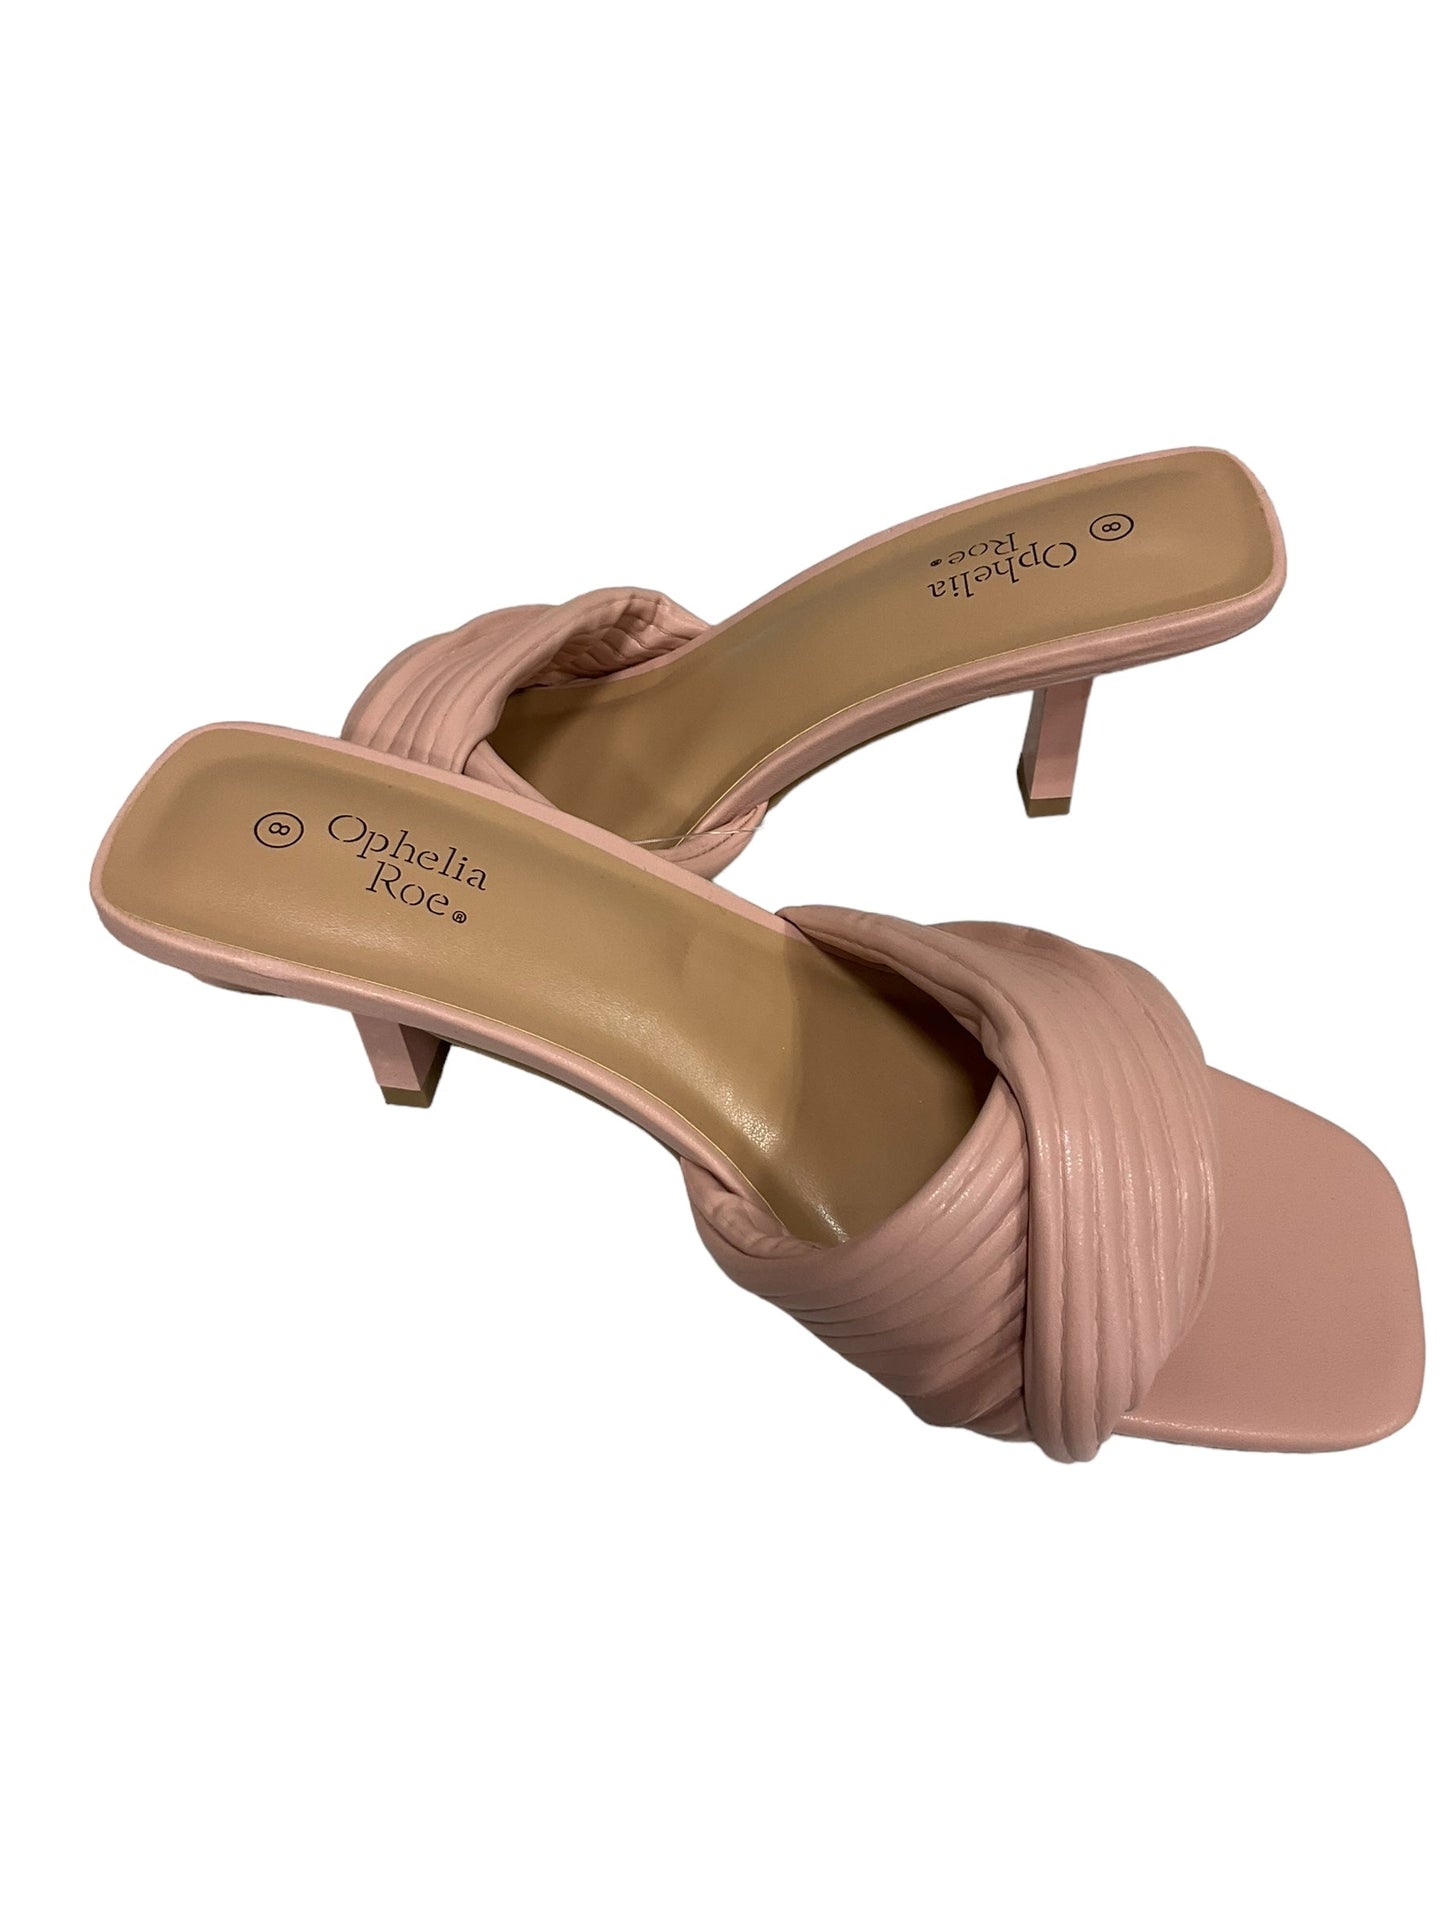 Pink Sandals Heels Block Ophelia Roe, Size 8